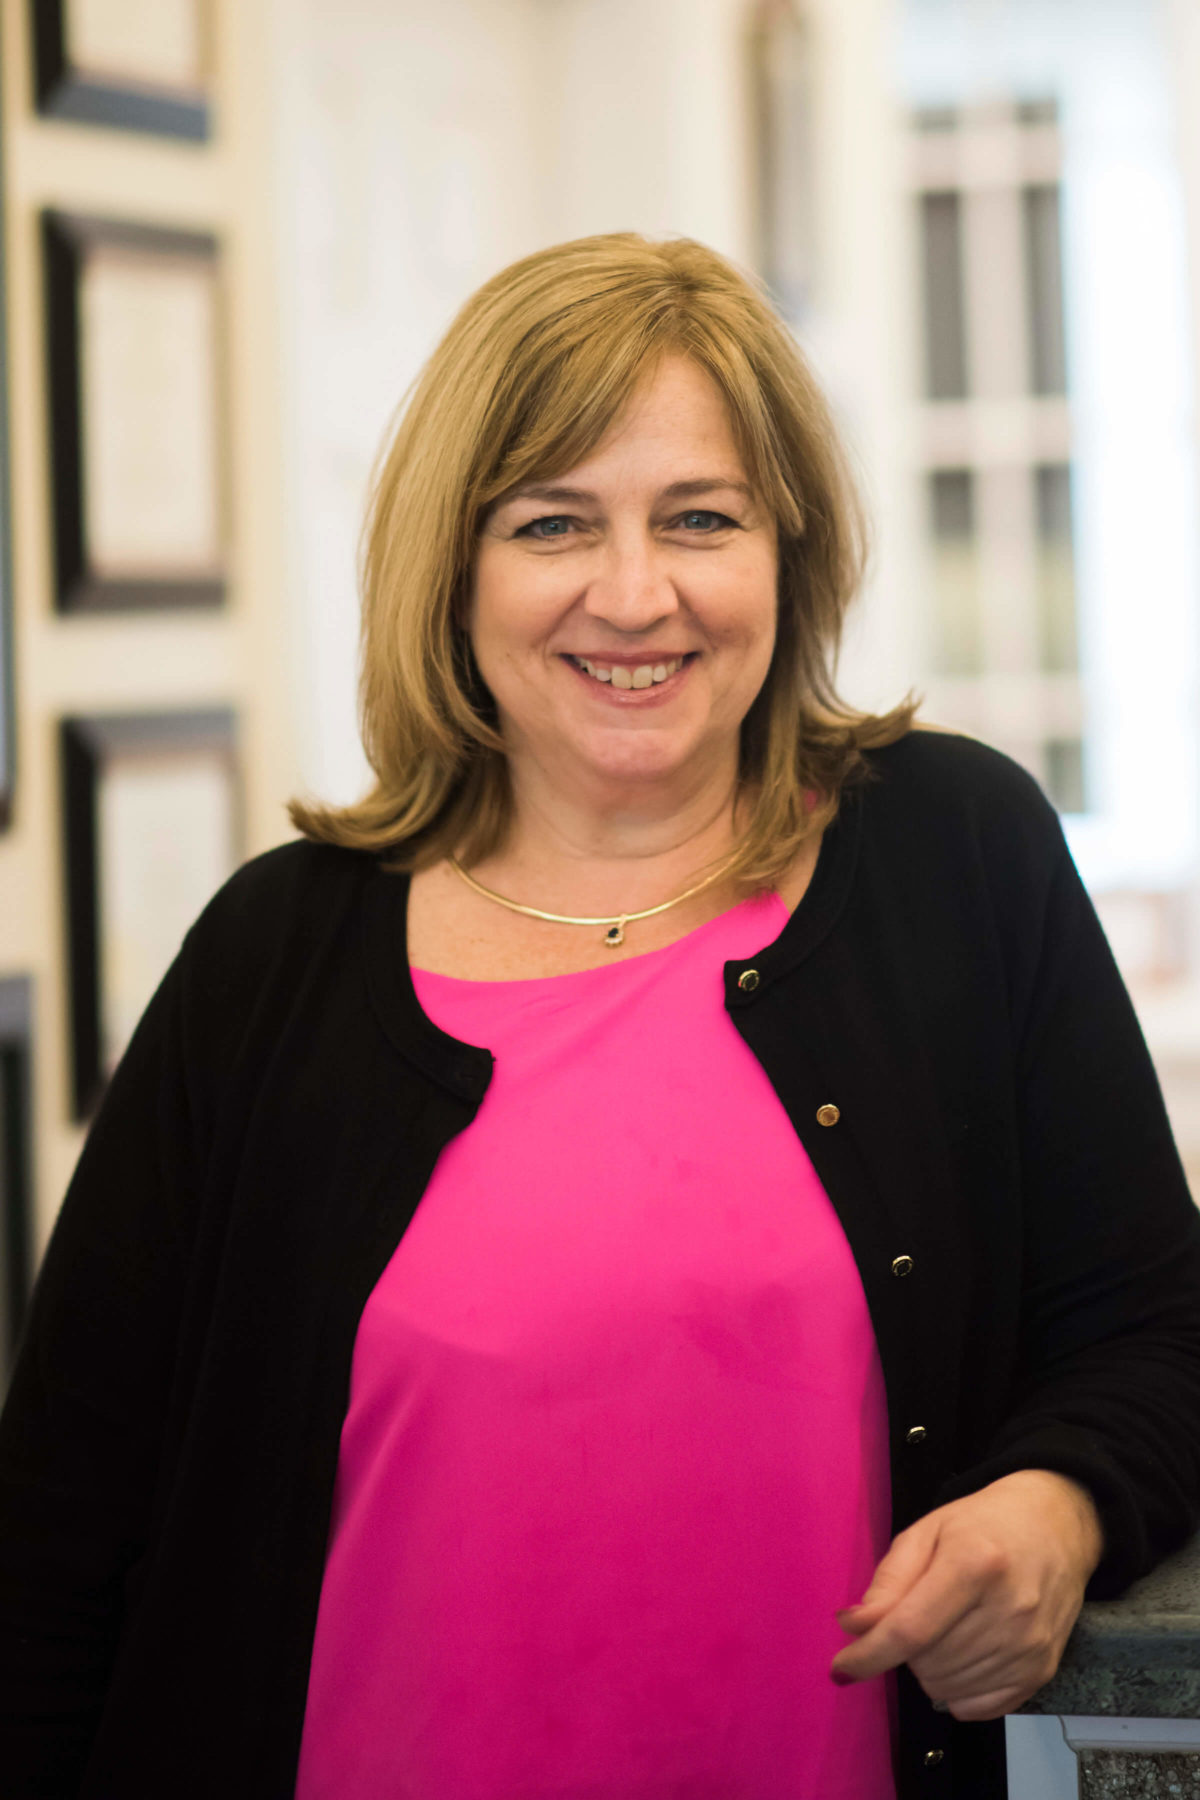 Kathy Dorjath – Patient Care Coordinator